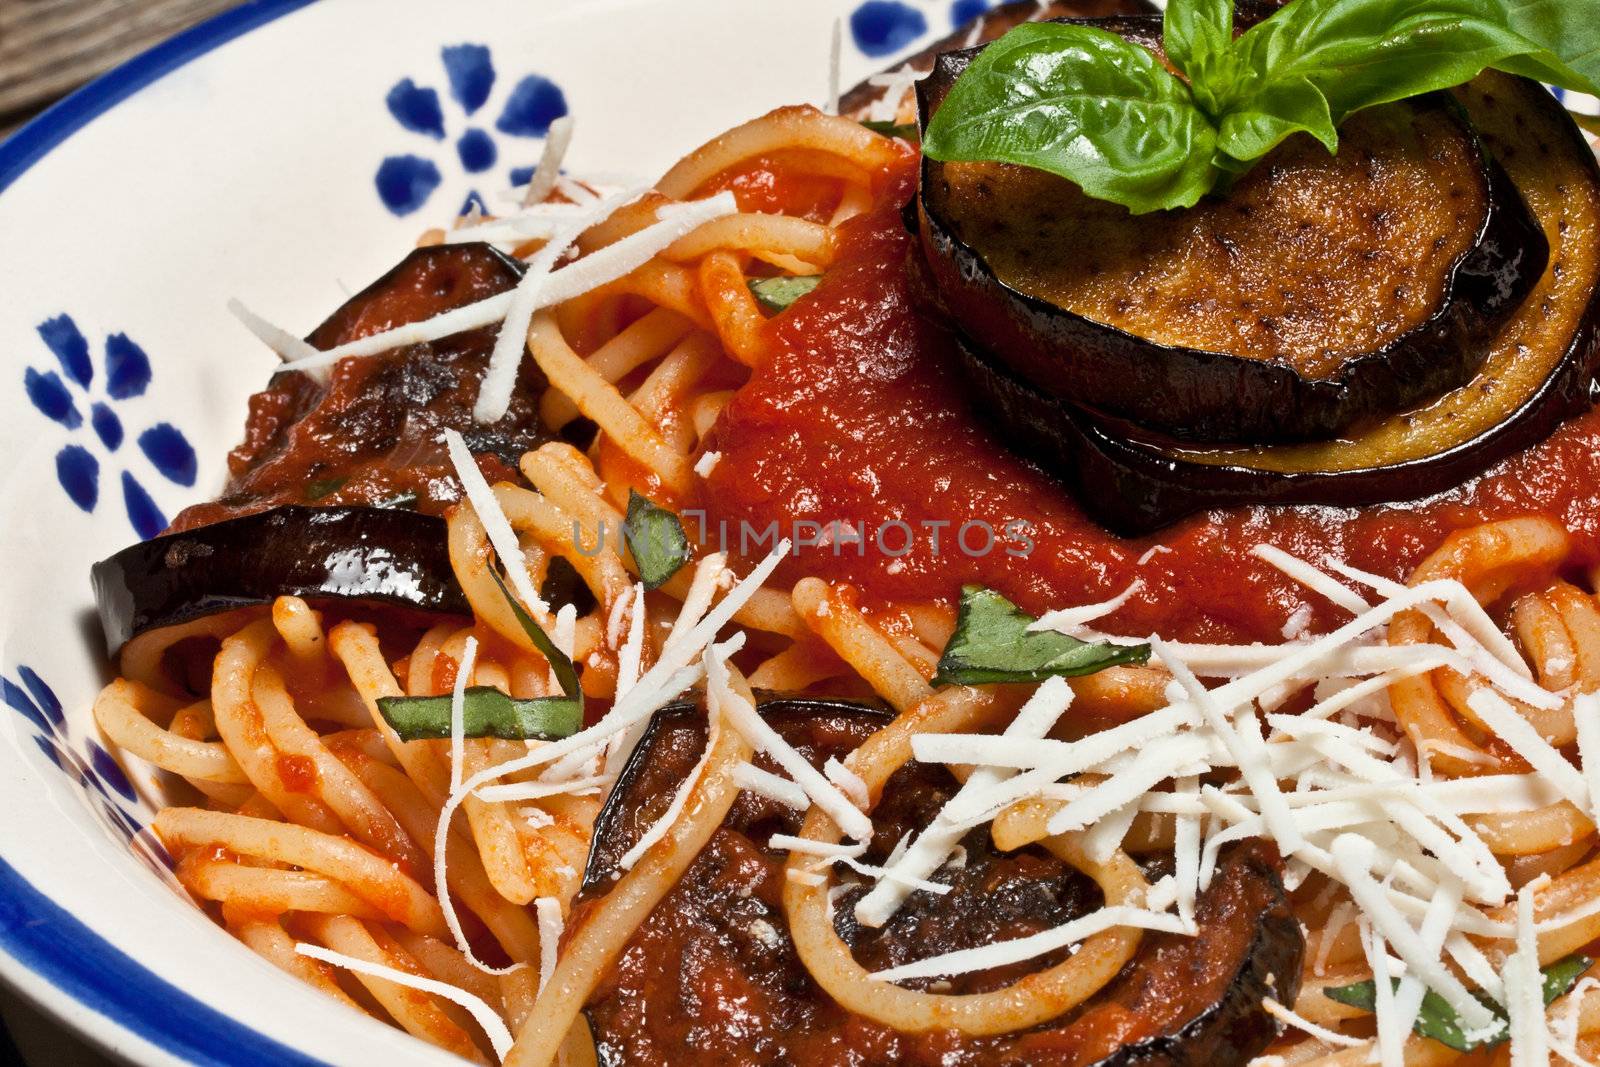 Italian Pasta Norma with tomato,ricotta cheese and eggplants